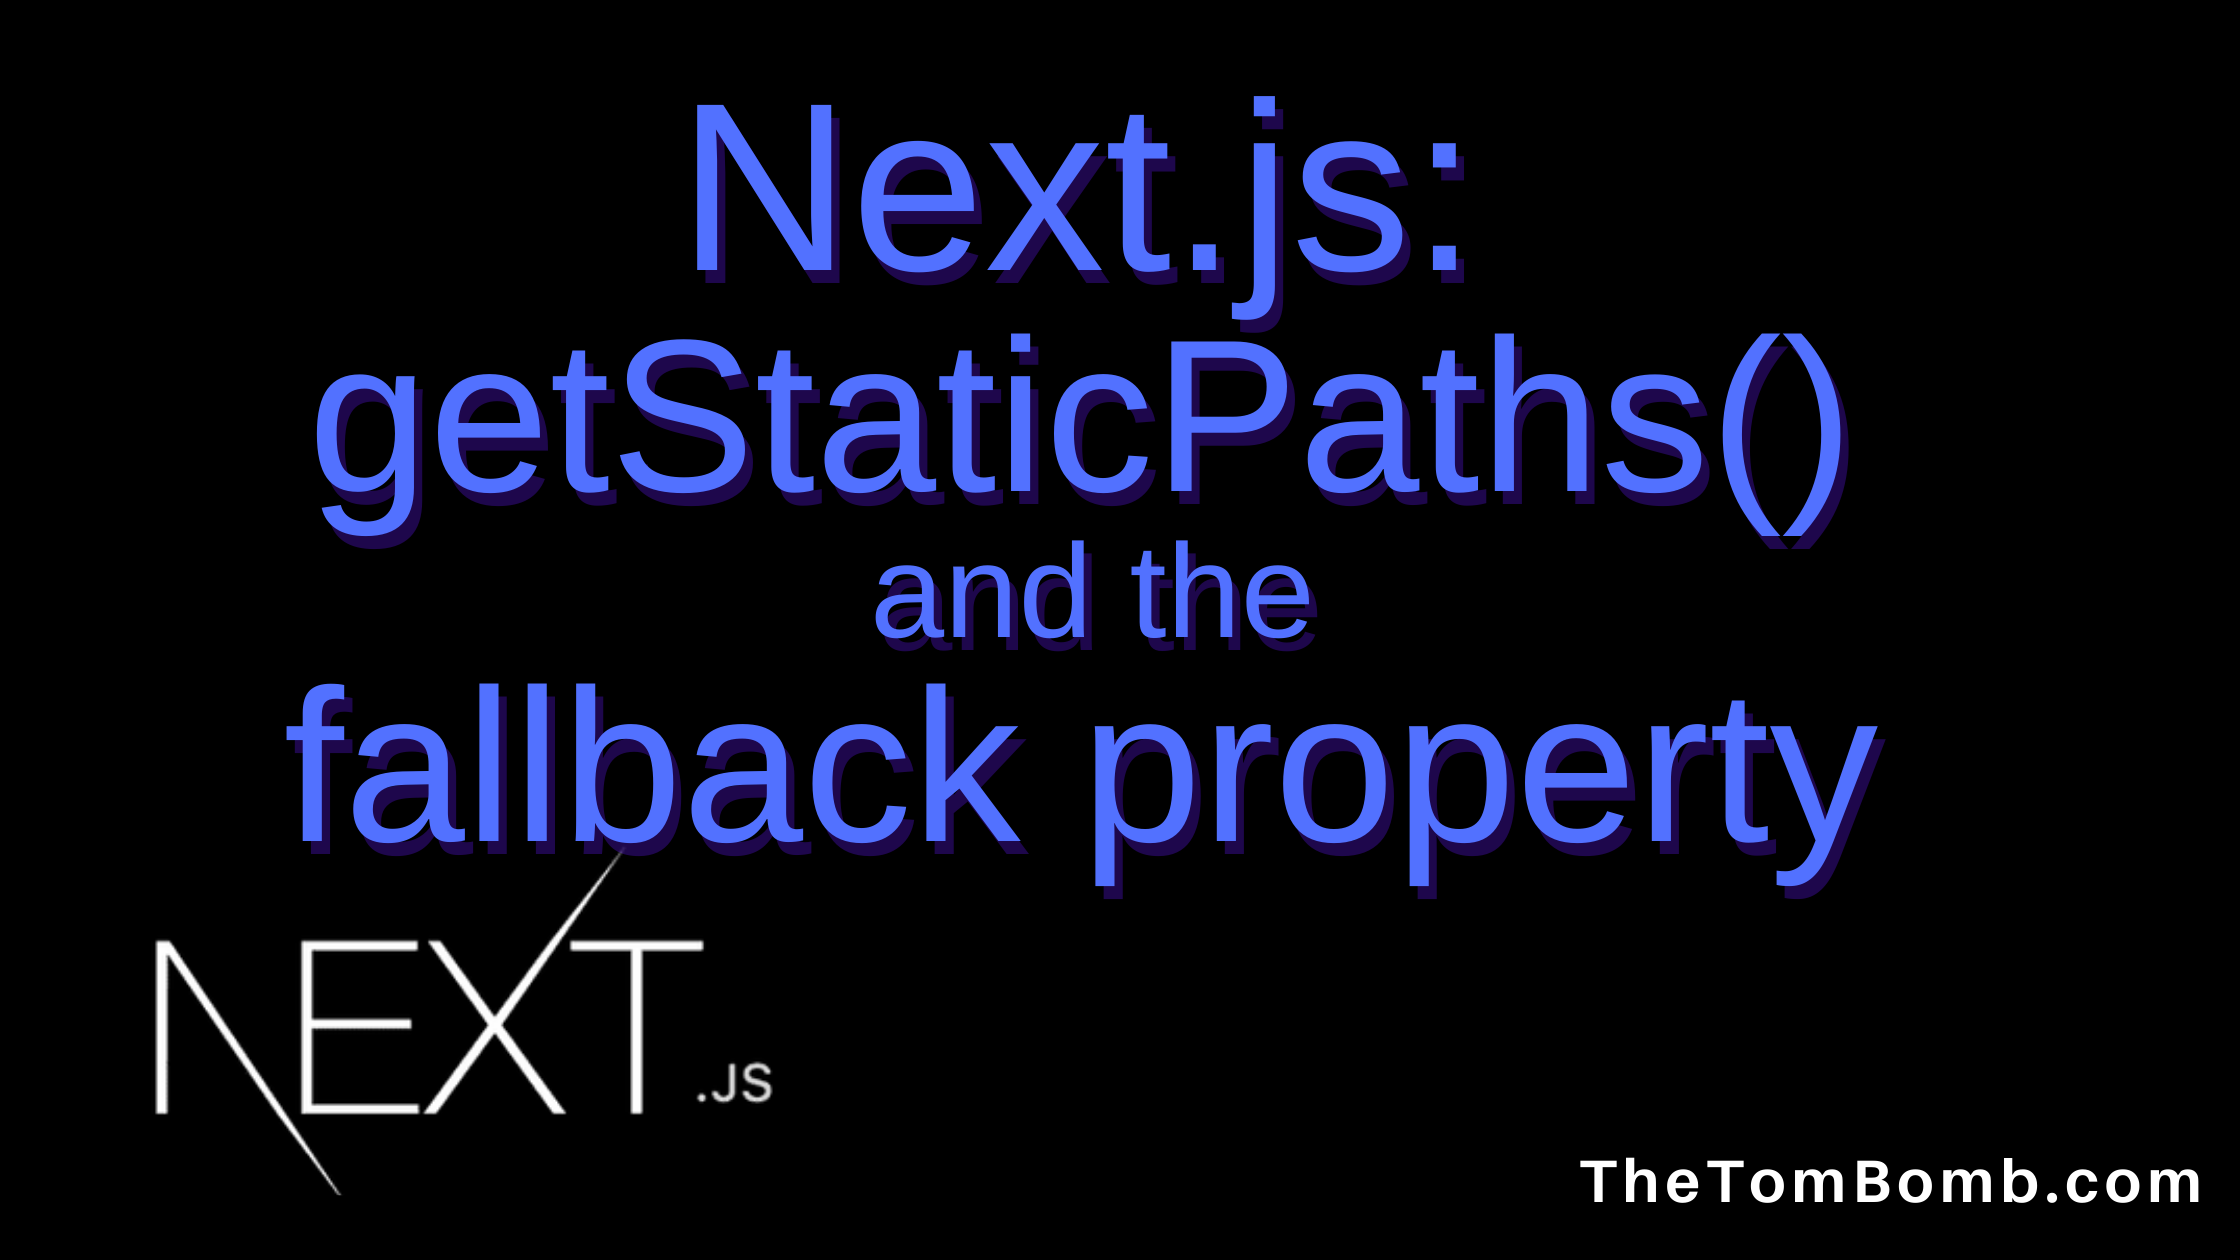 Blog banner image with text Next.js incremental static regeneration